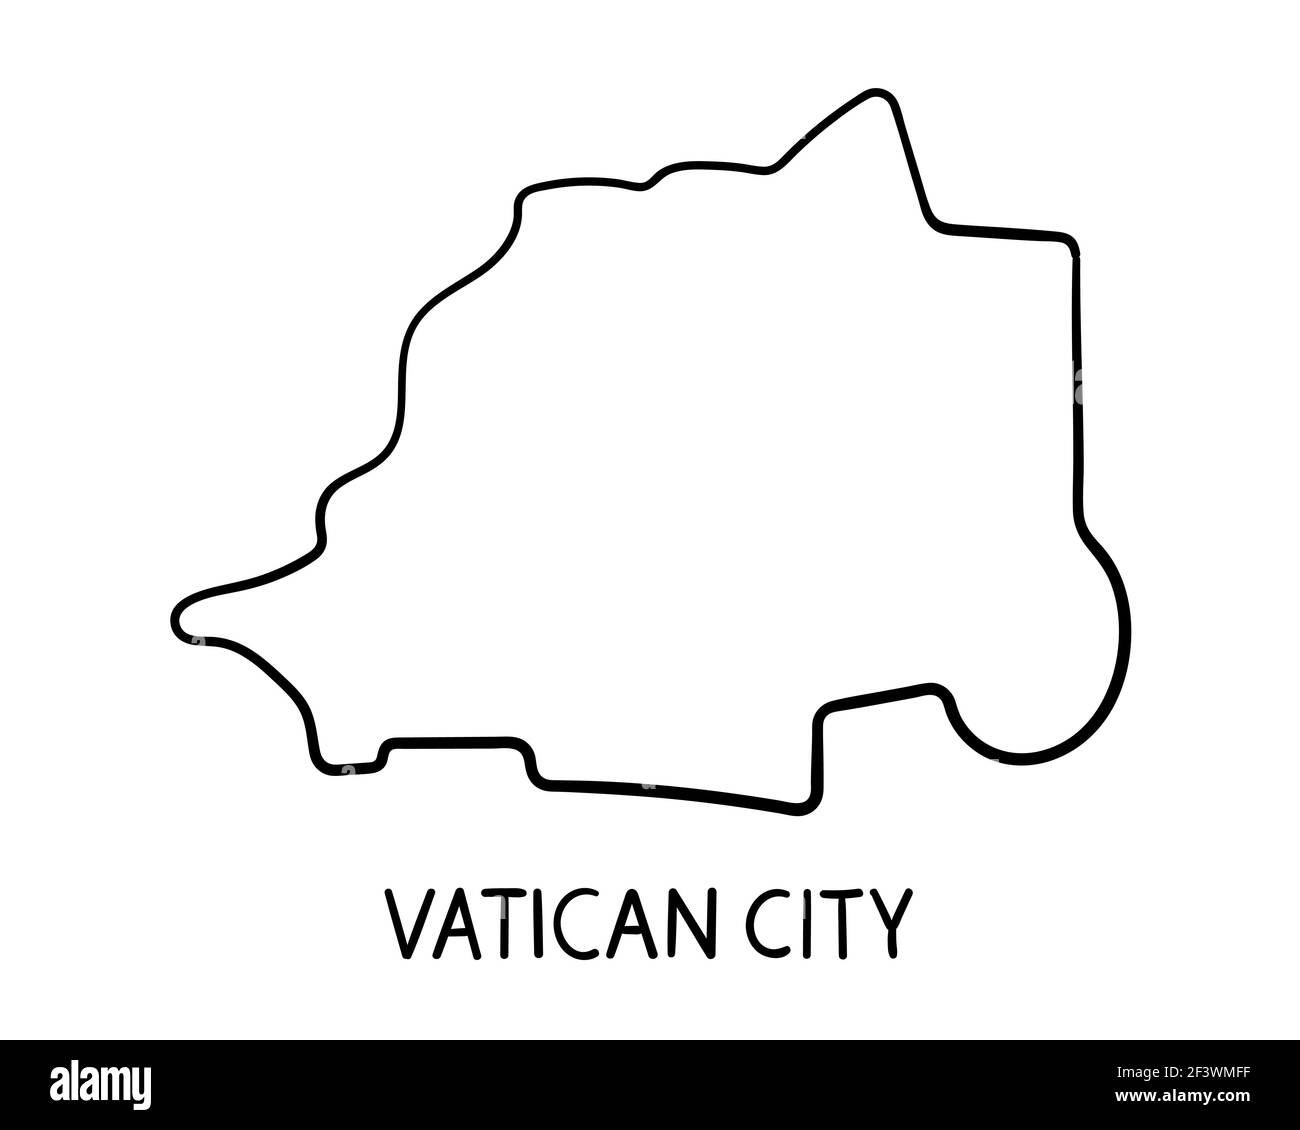 Hand drawn Vatican City map illustration Stock Photo